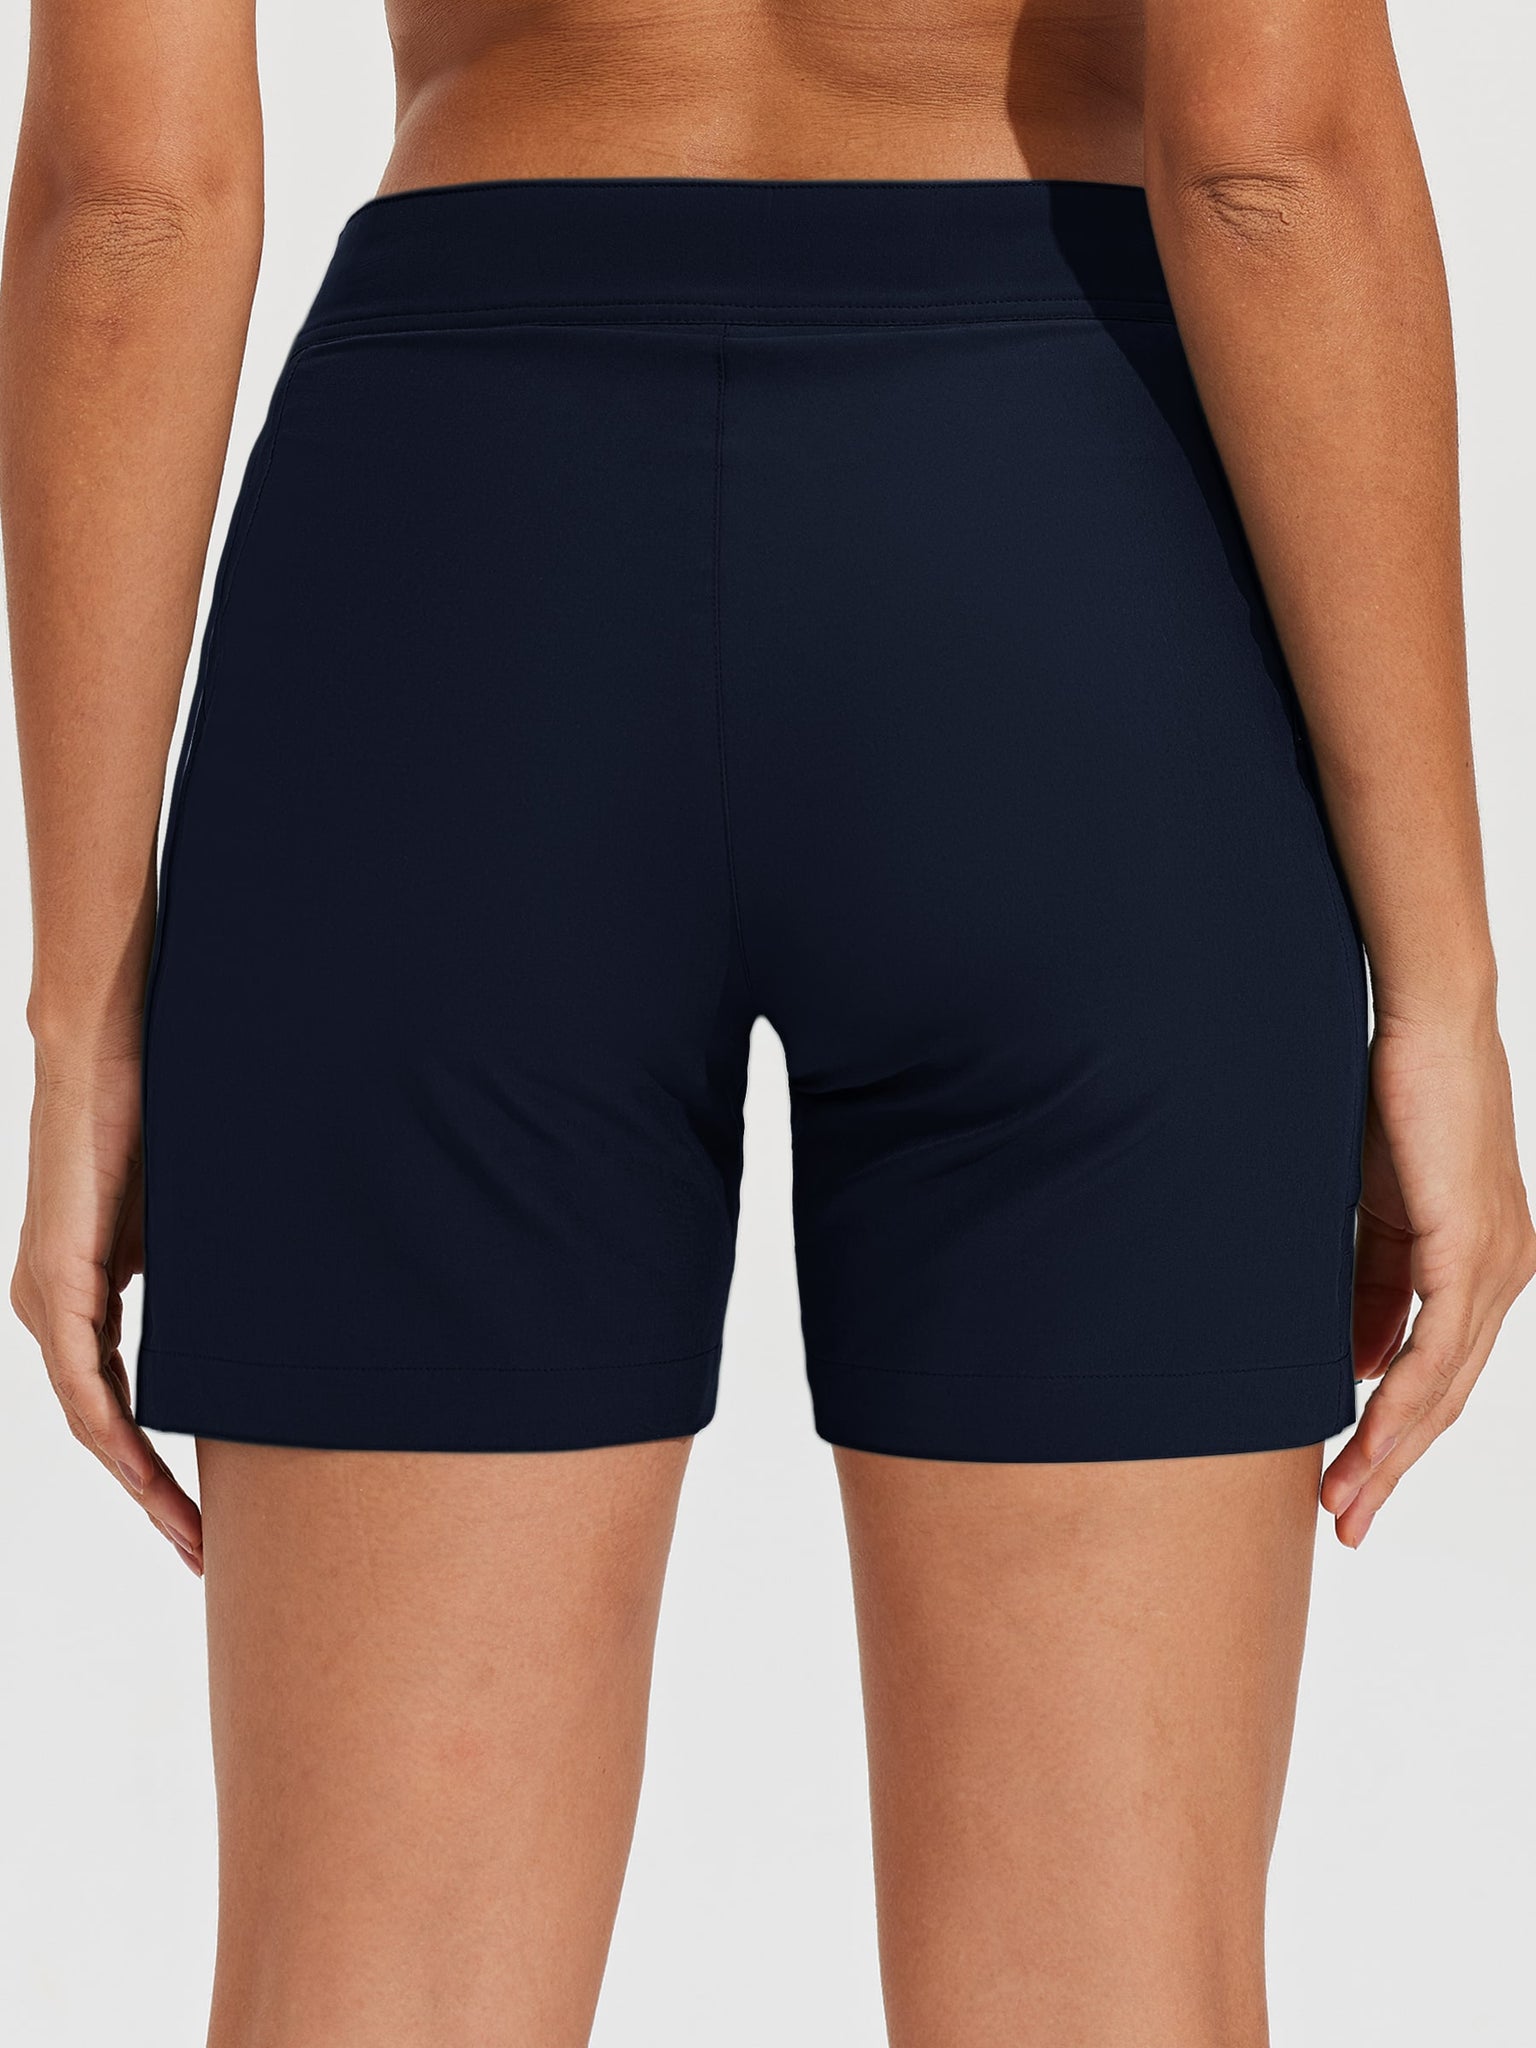 Women's Fixed Waist Board Shorts_Navy_model3